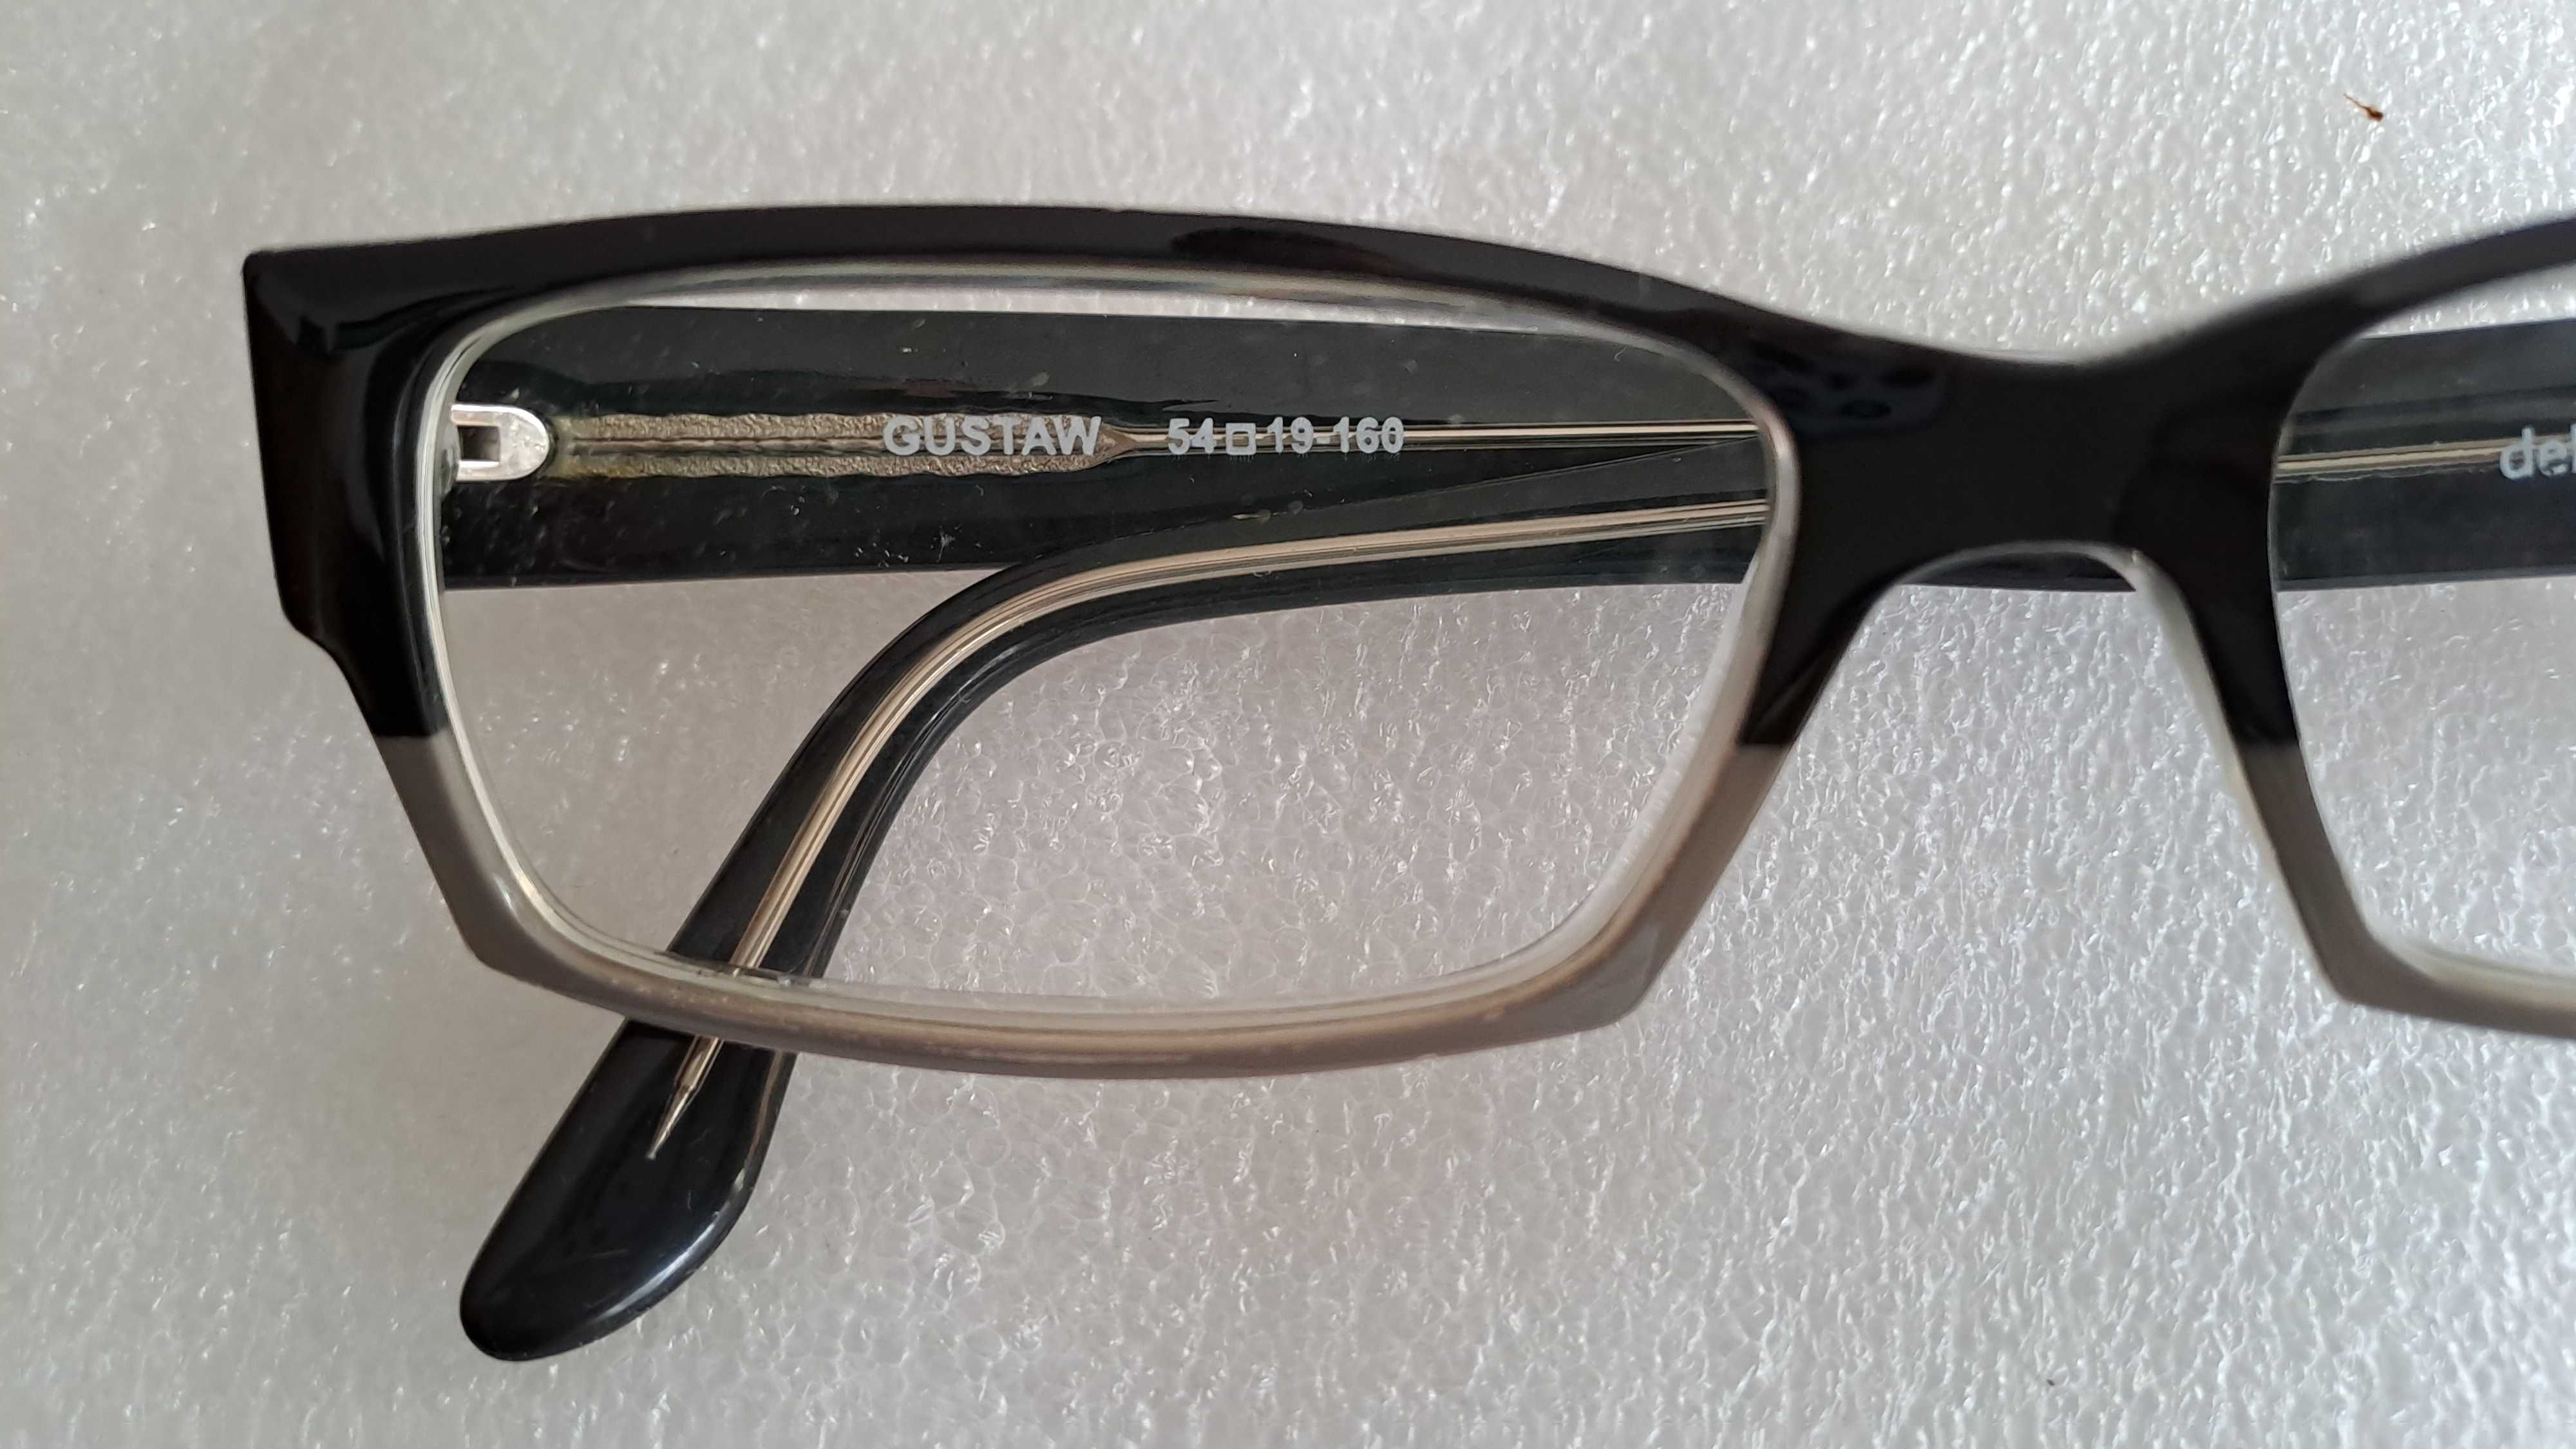 oprawki okularowe męskie Dekoptika GUSTAV 54[ ]19-160